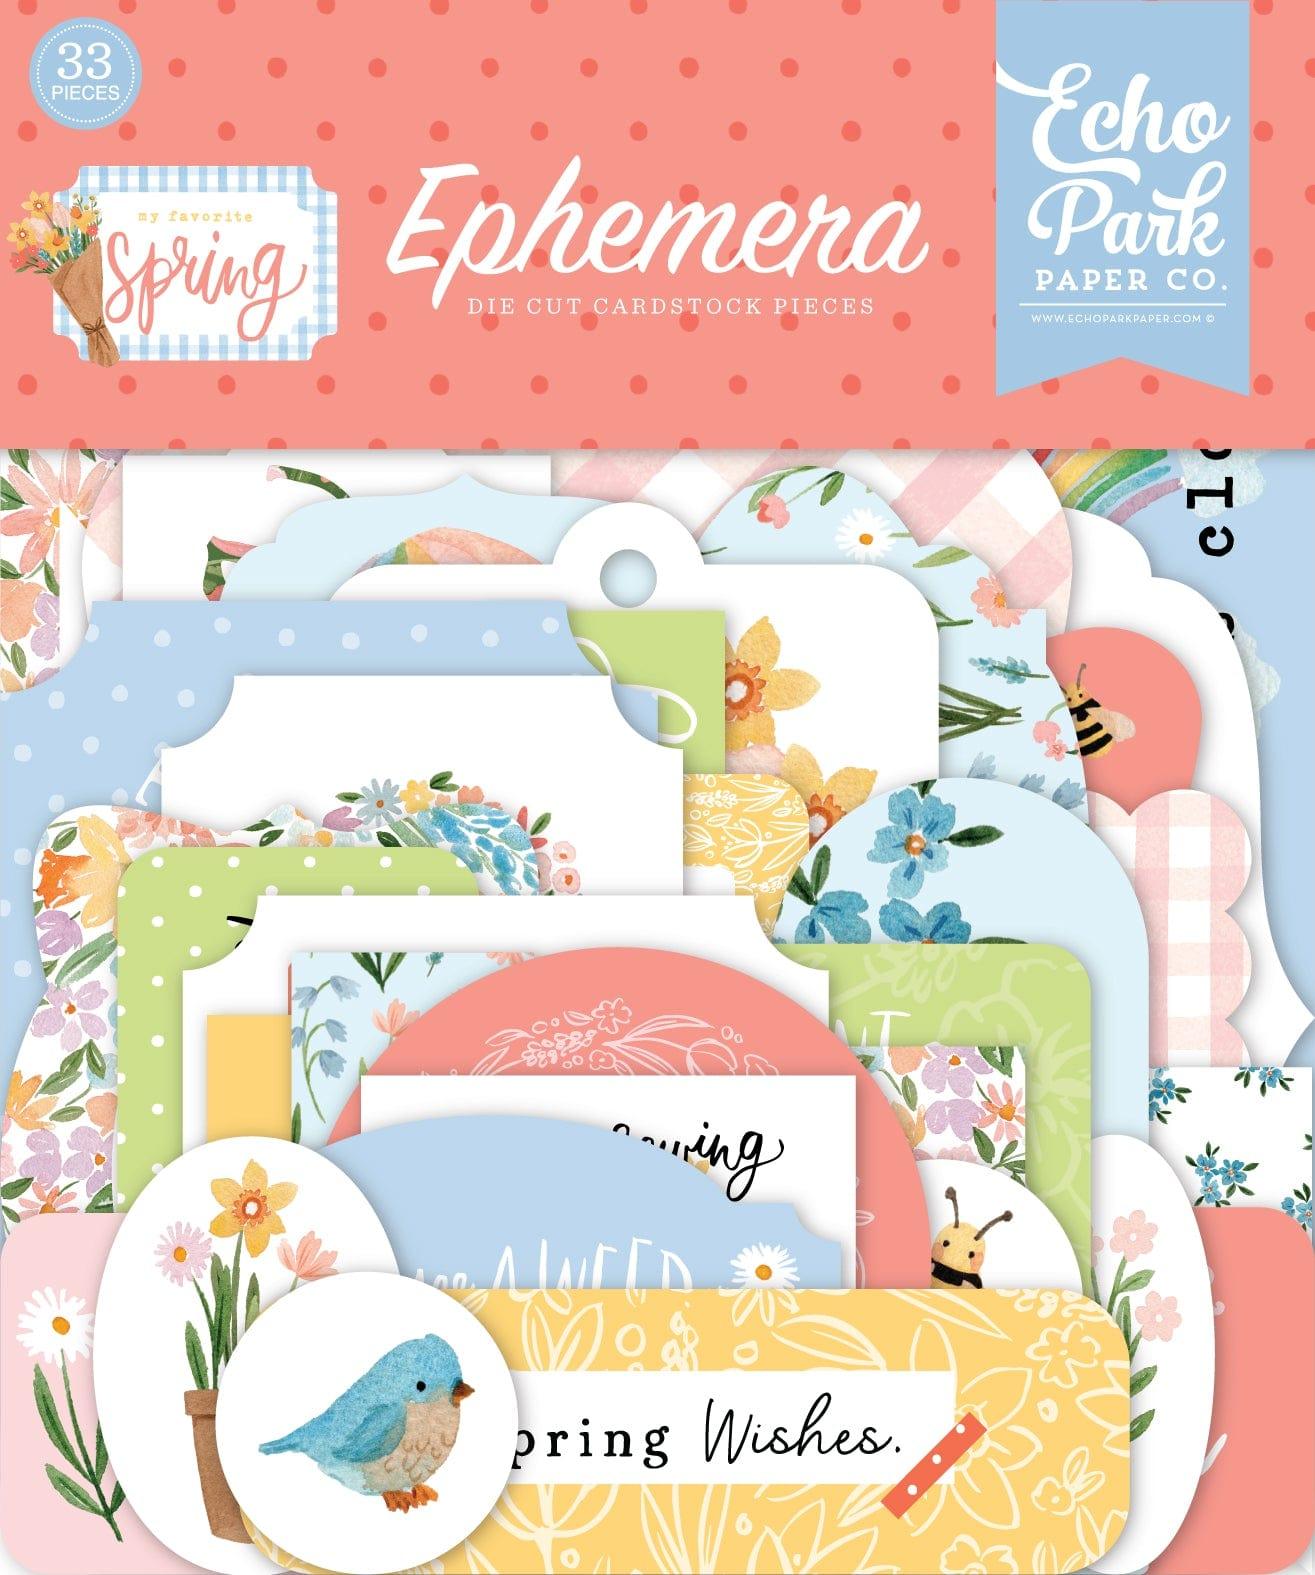 My Favorite Spring Collection 5 x 5 Scrapbook Ephemera Die Cuts by Echo Park Paper - Scrapbook Supply Companies